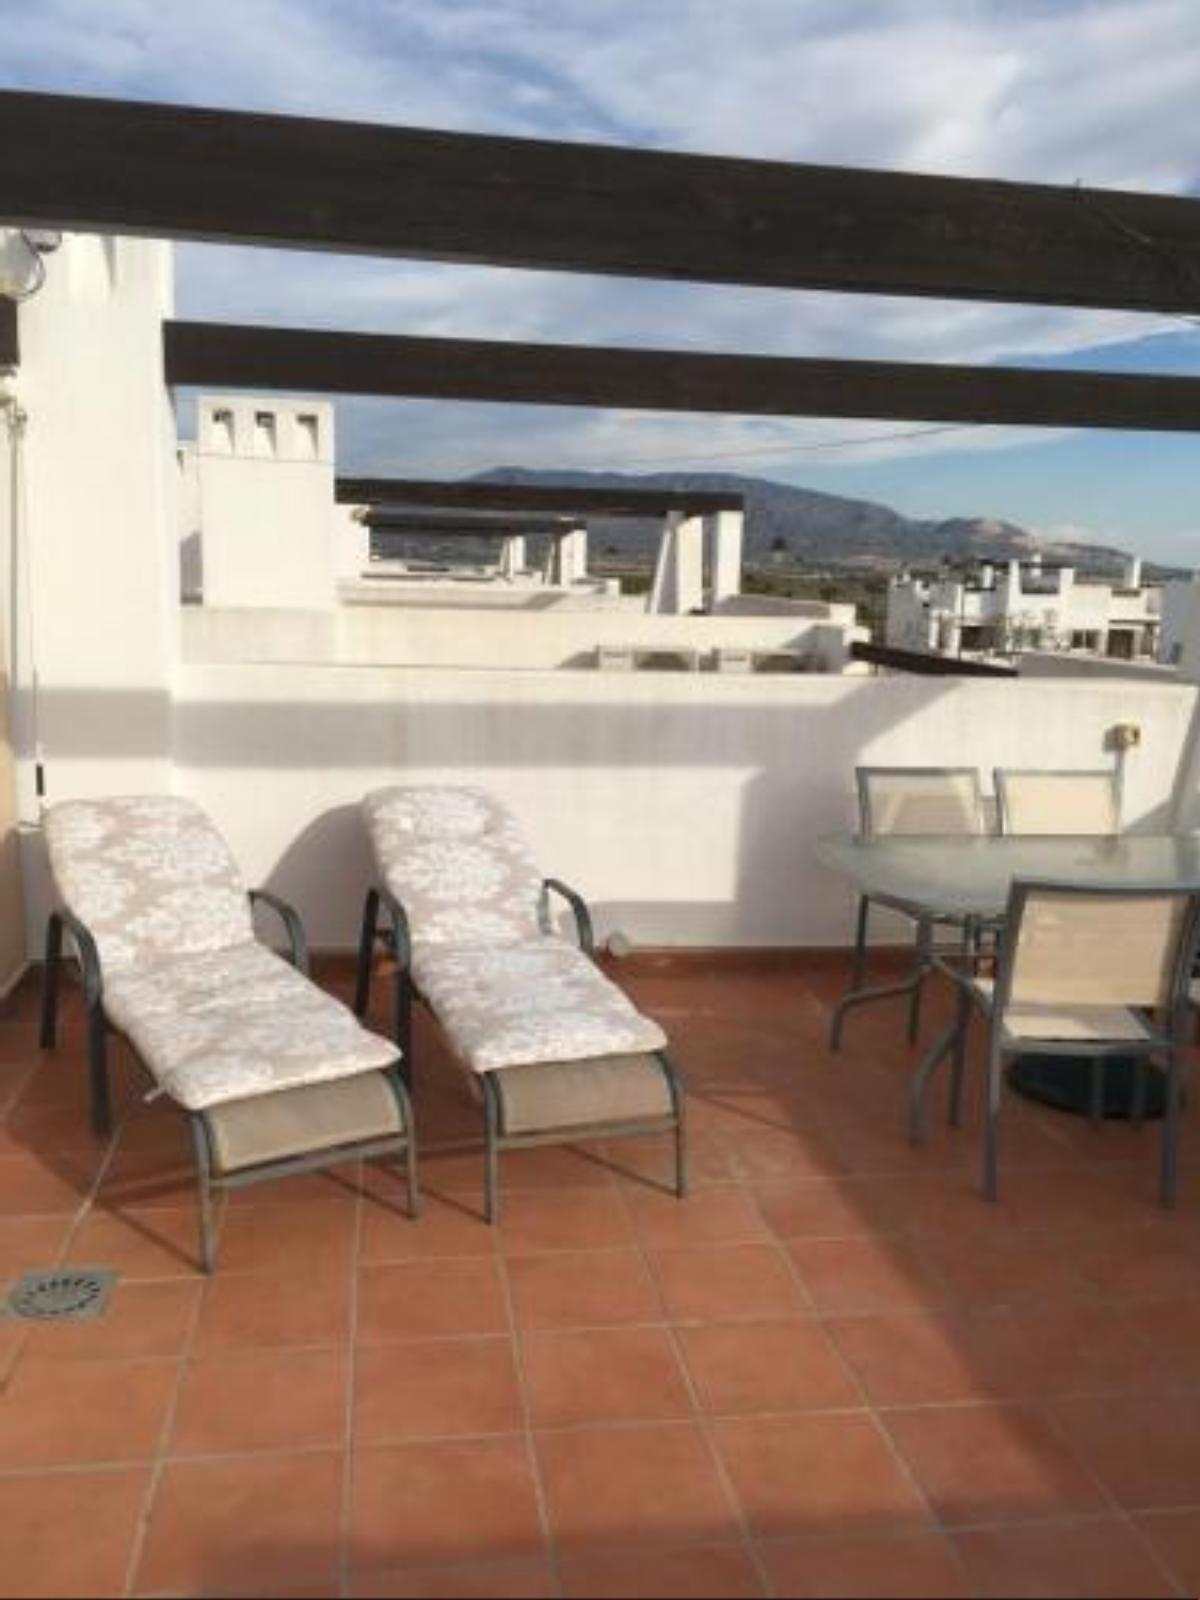 Apartment N266 Hotel Alhama de Murcia Spain